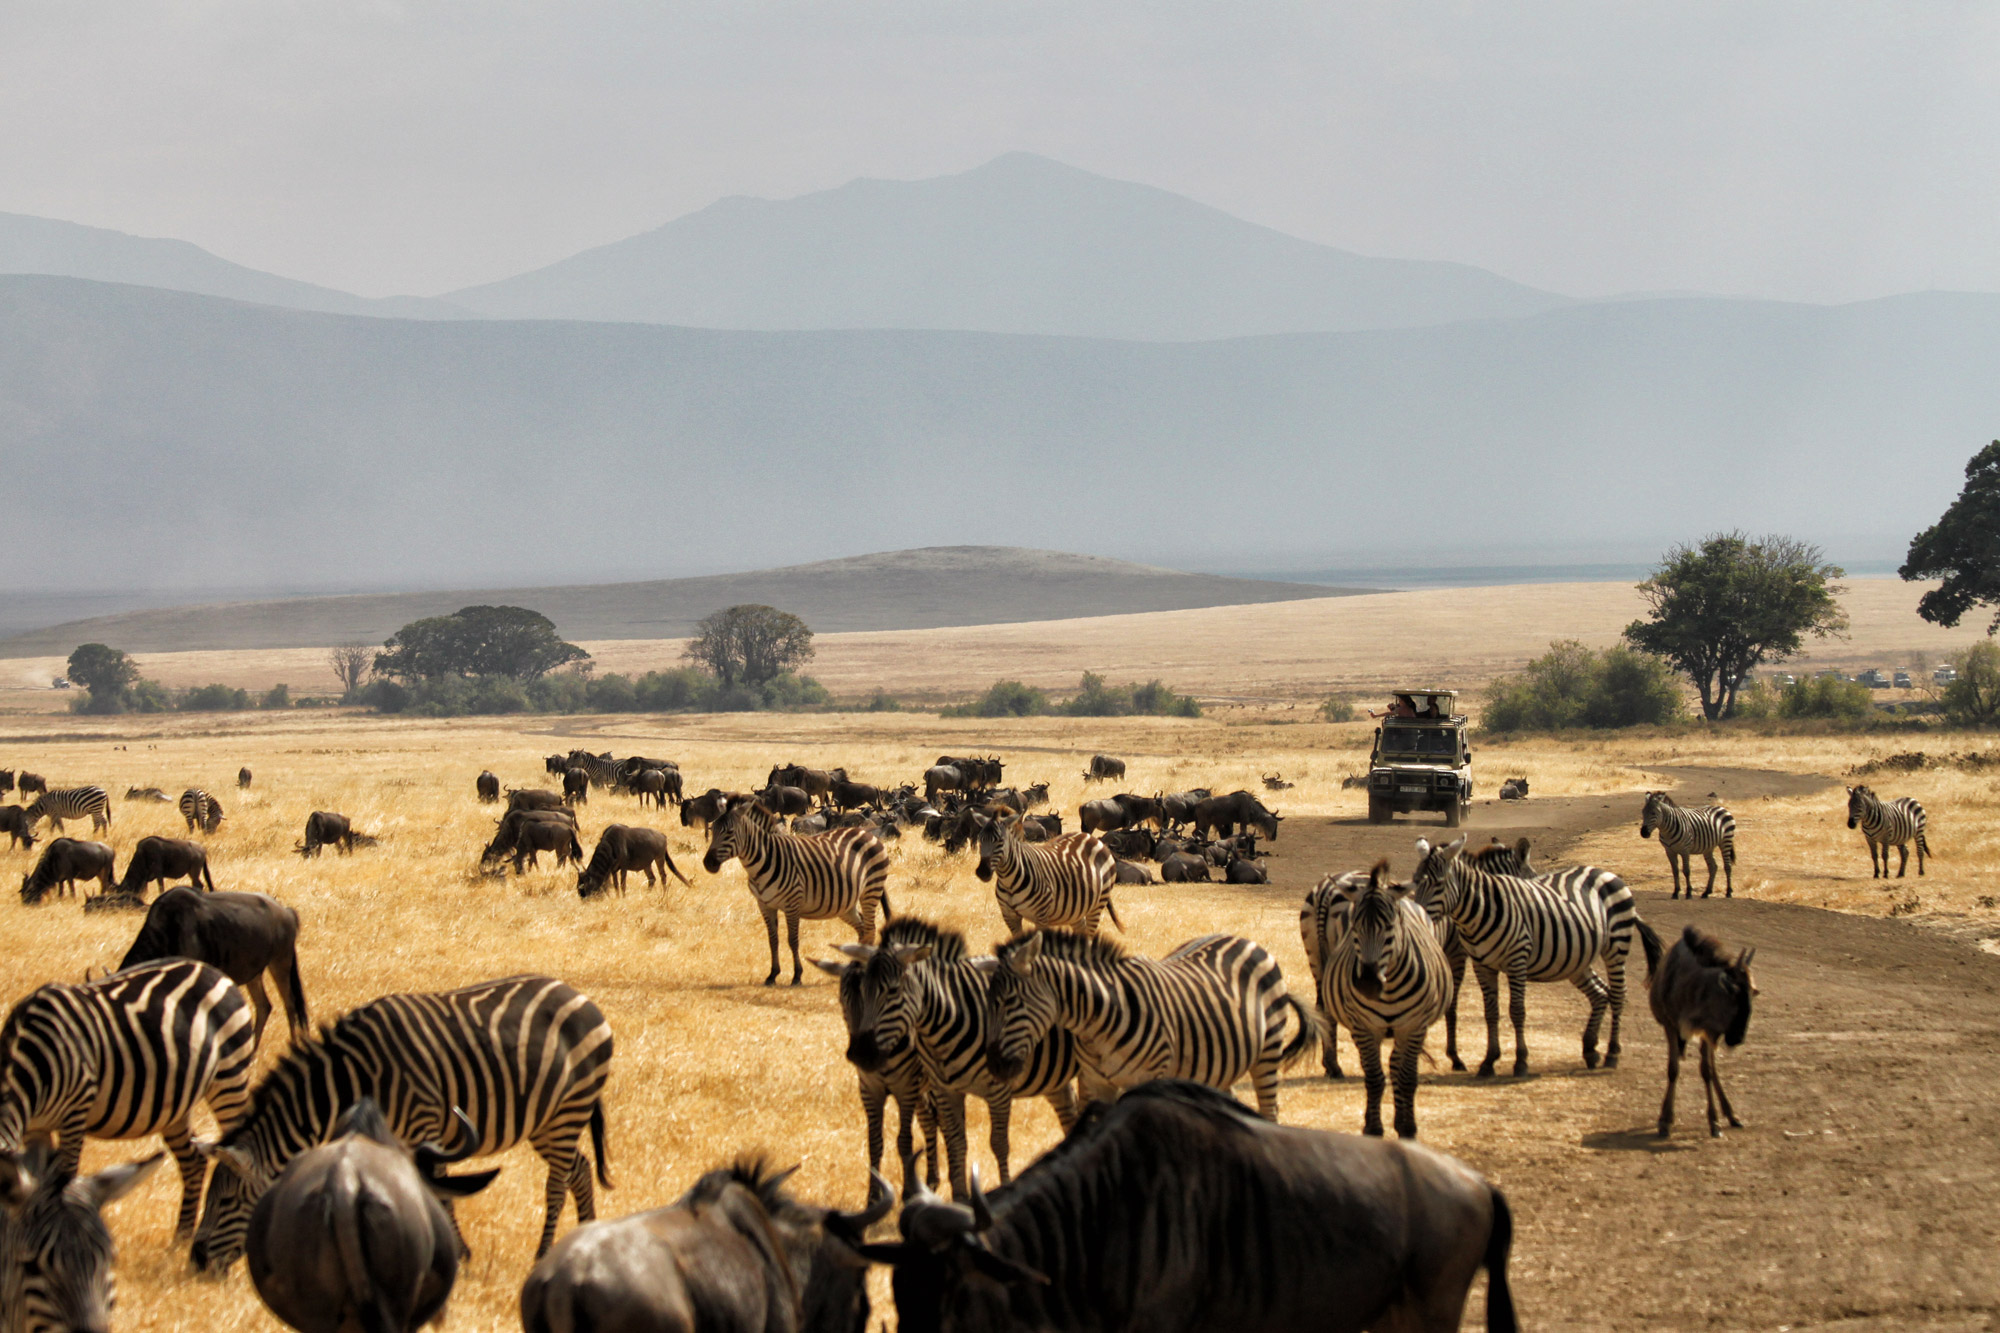 UNESCO Werelderfgoedlijst - Ngorongoro krater - Tanzania